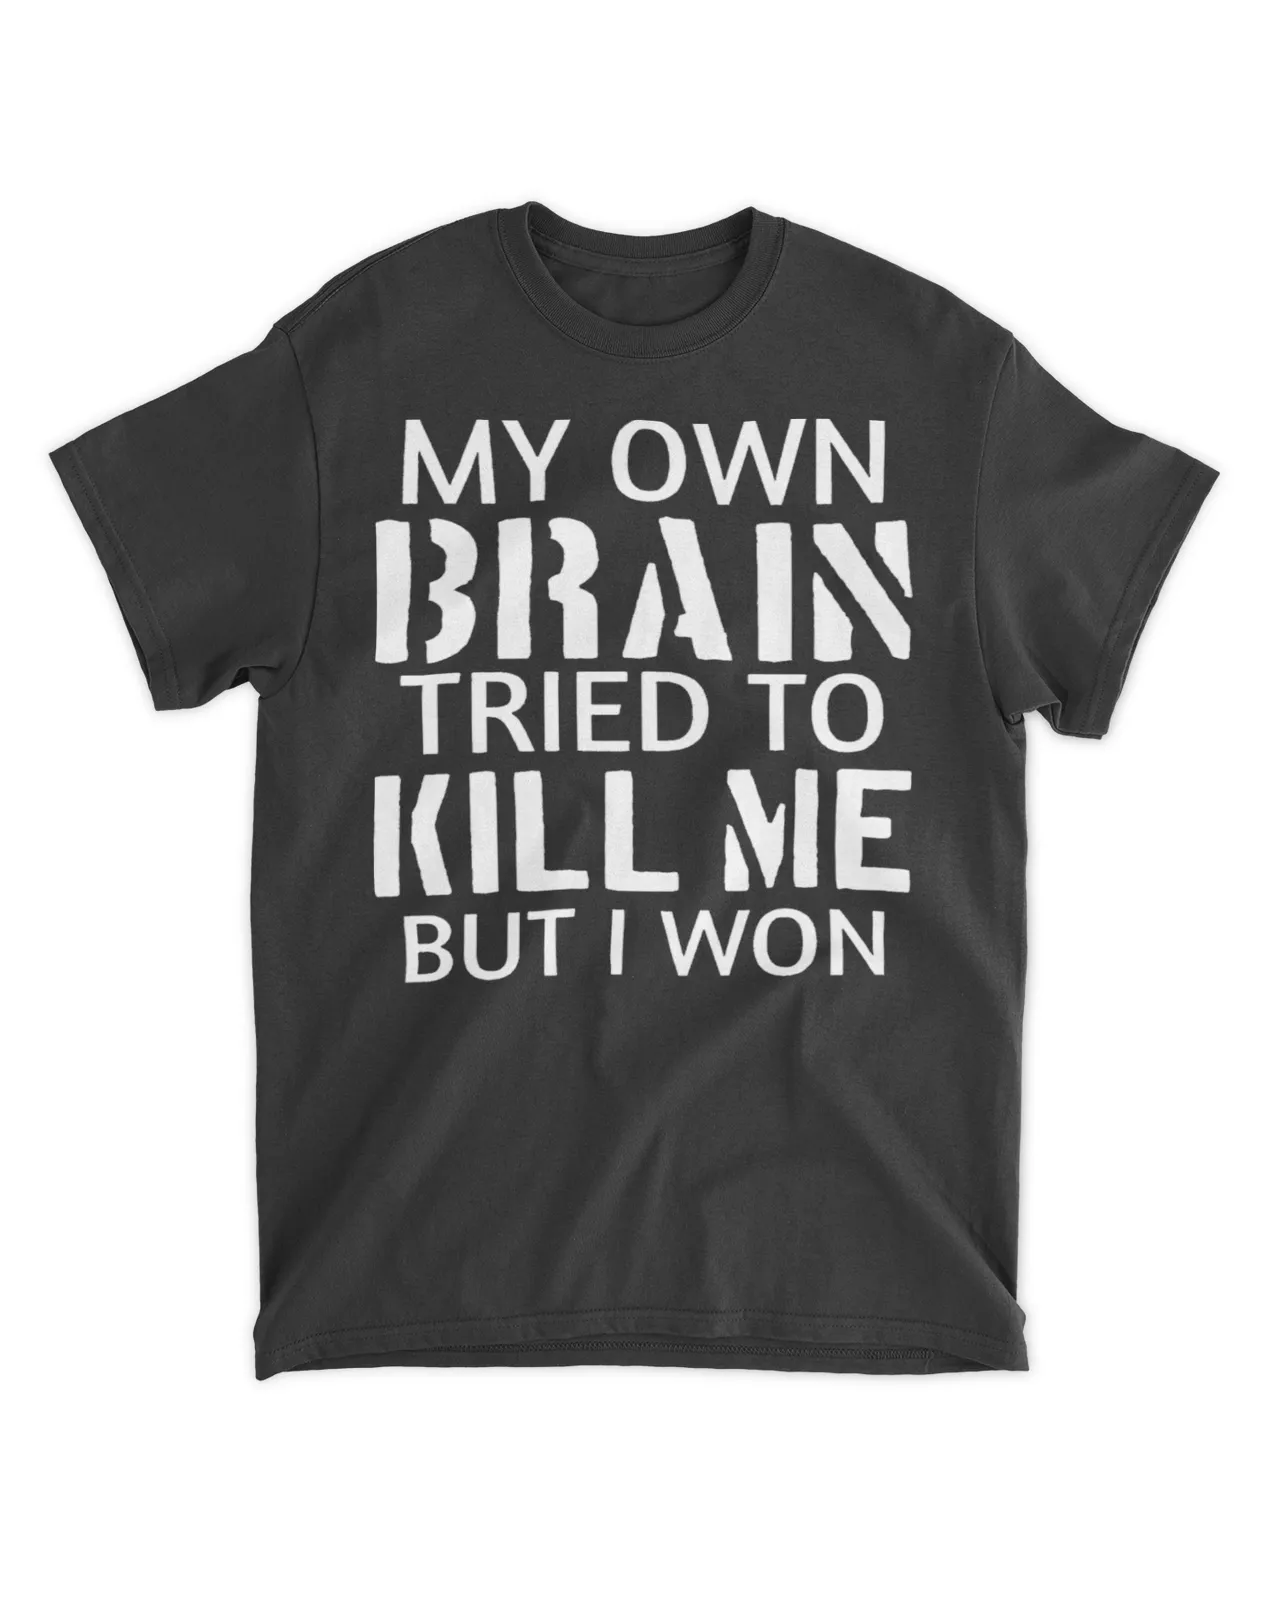  My own brain tried to kill me but I won shirt